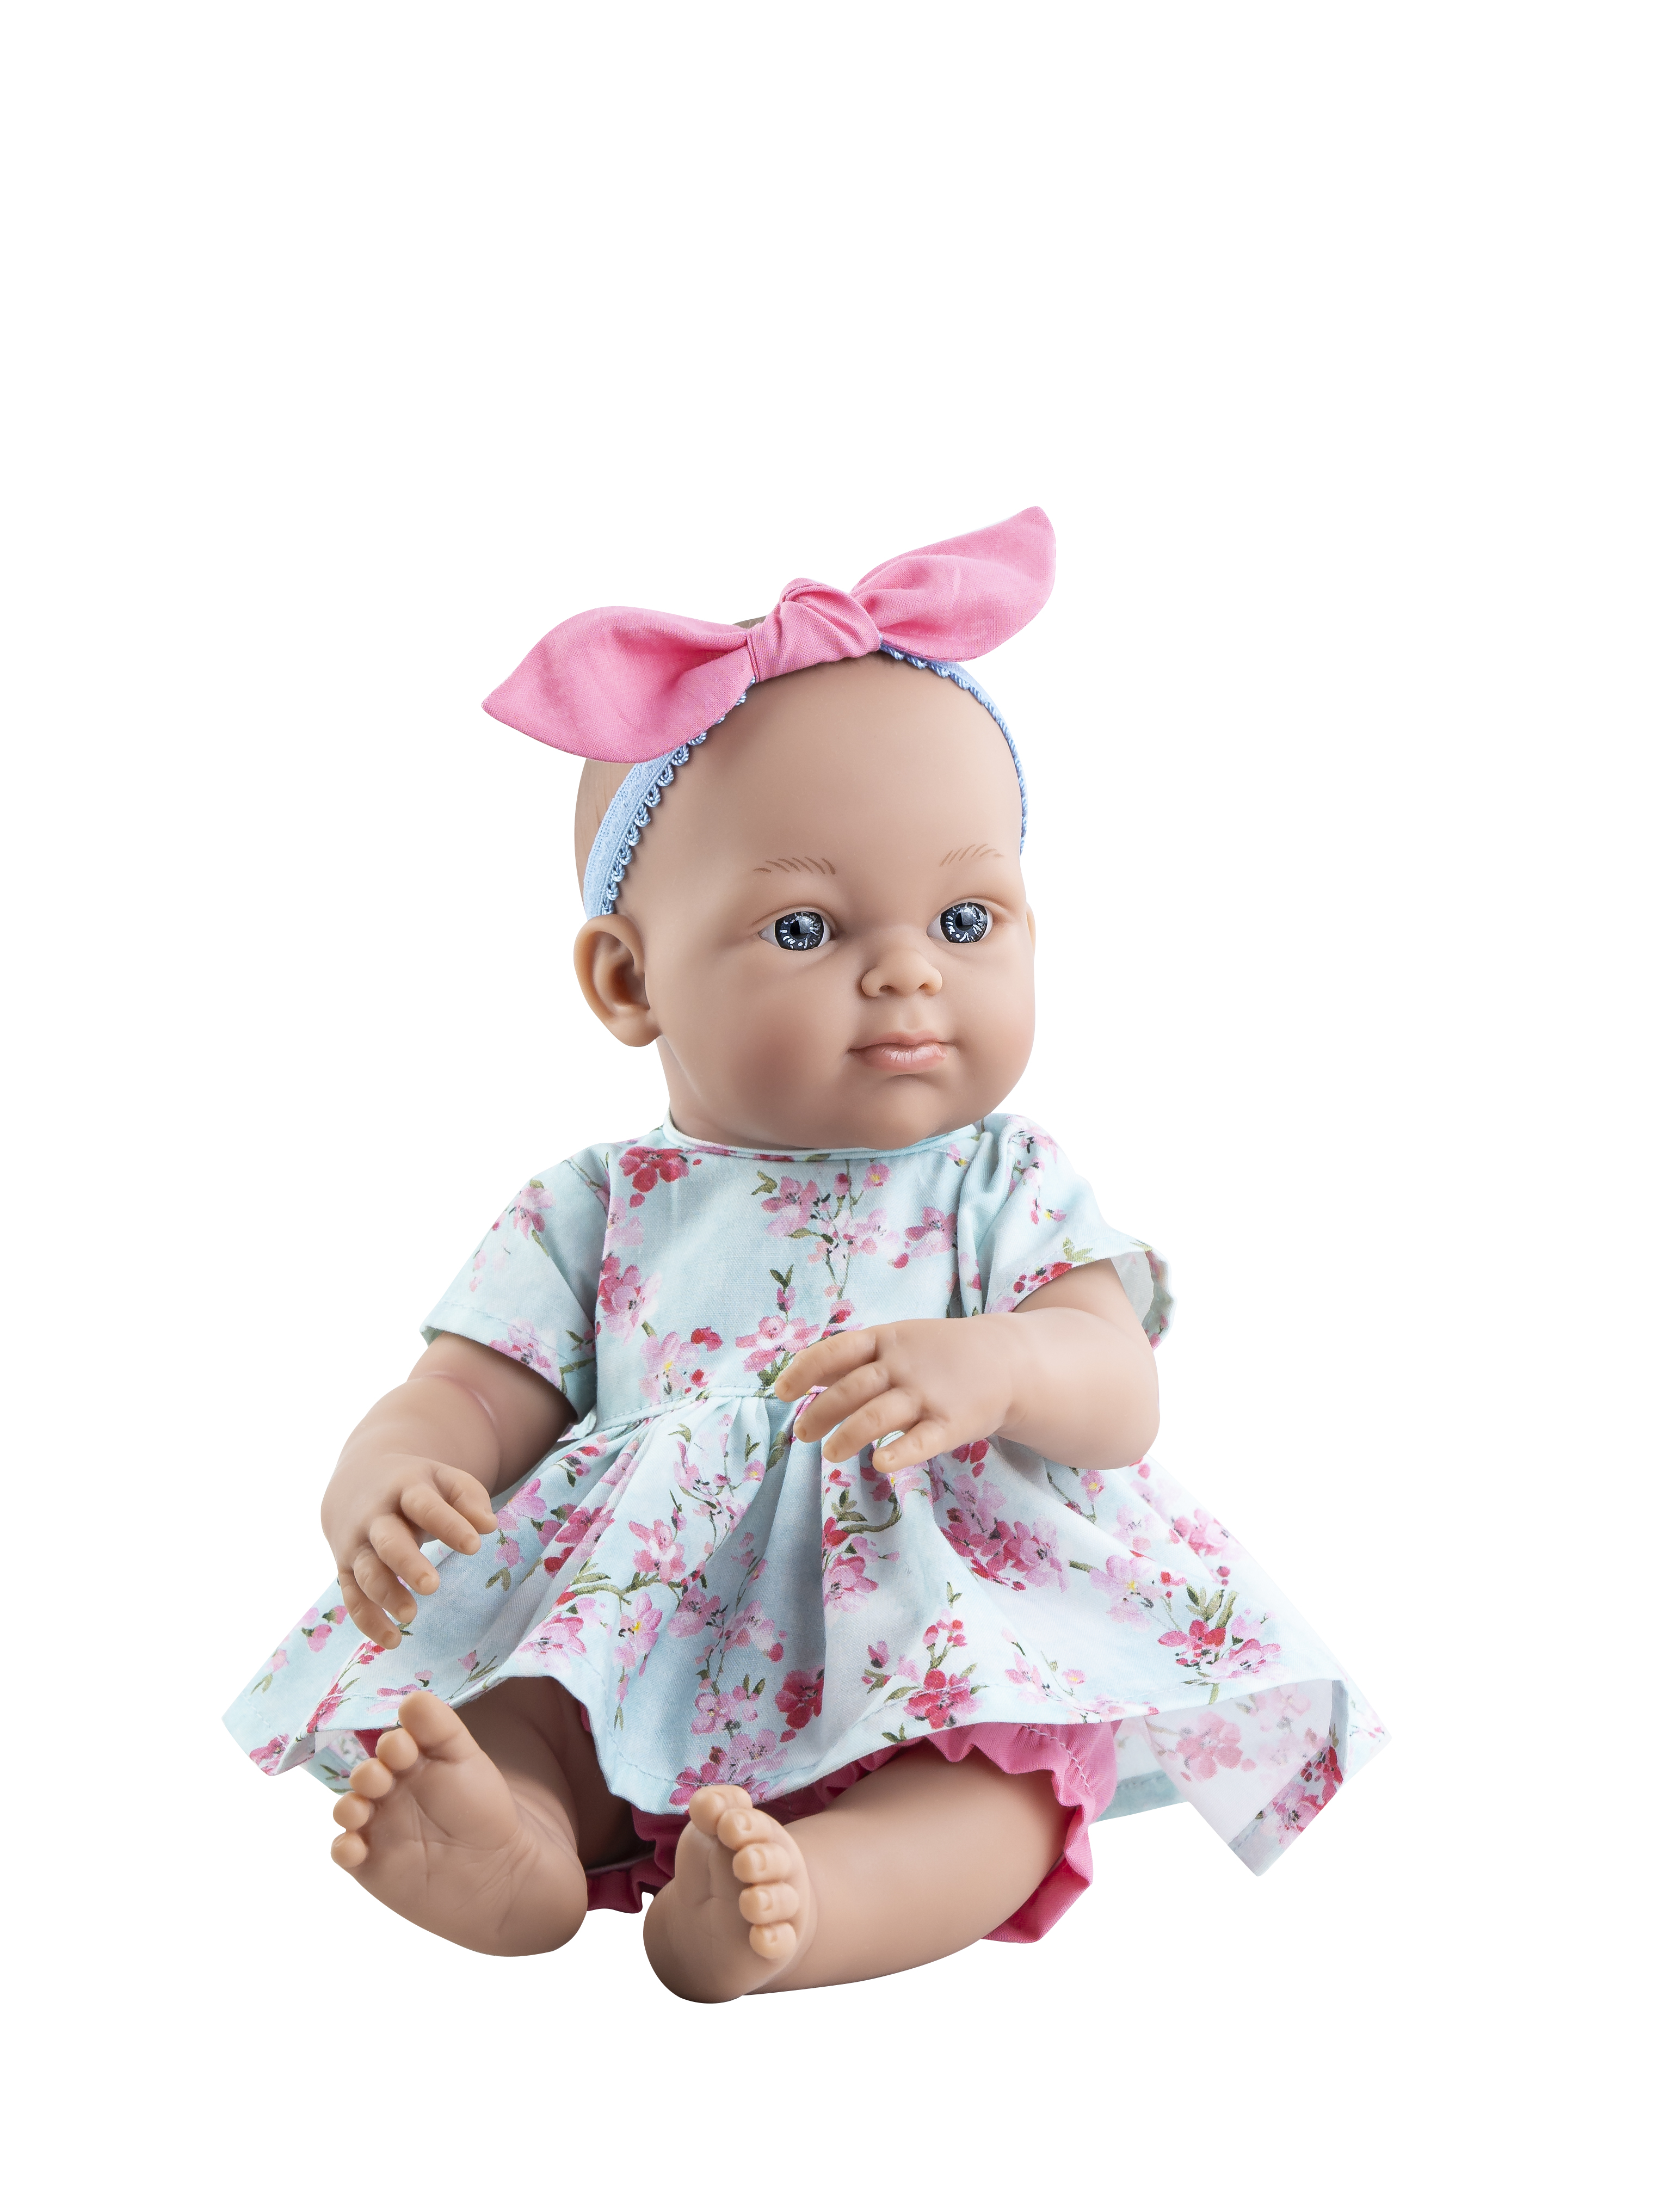 Paola Reina Кукла Бэби в розово-голубом наряде, 32 см, арт. 05130